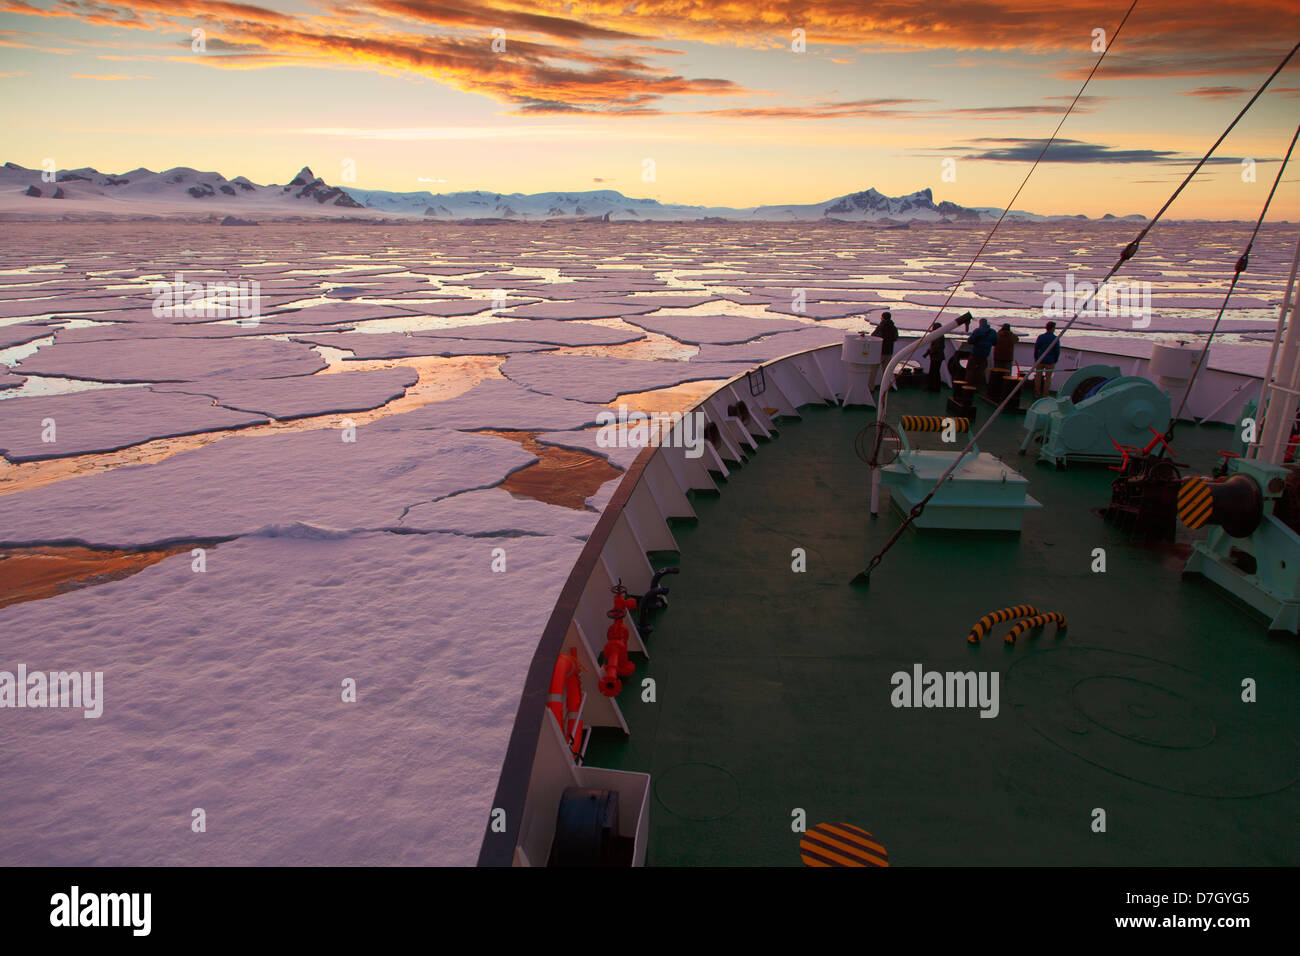 Icebreaker Ortelius moving through ice at sunset / sunrise as we travel below the Antarctic Circle, Antarctica.  Stock Photo